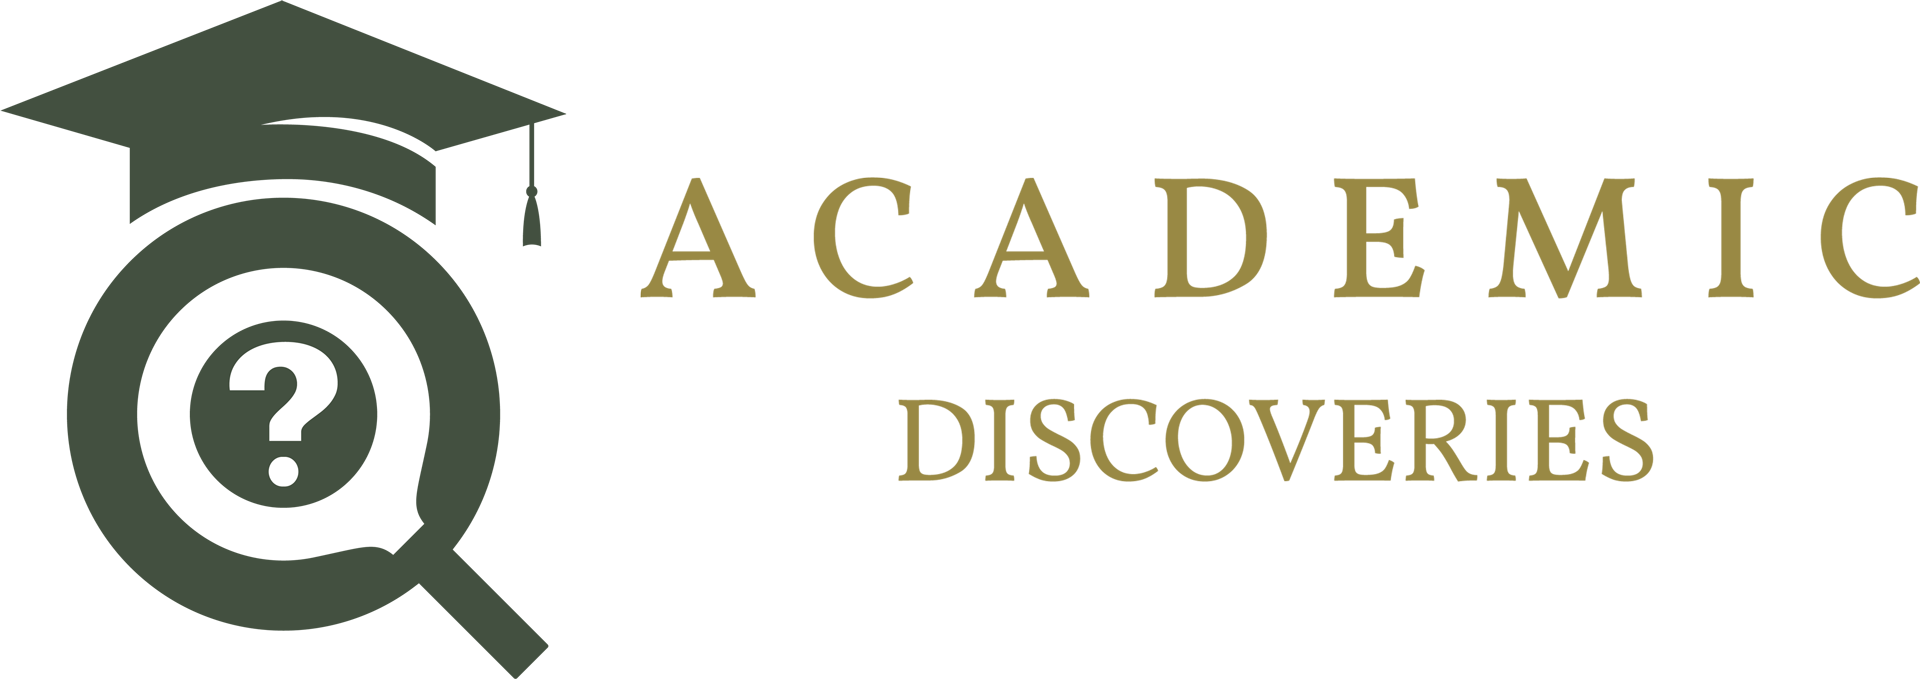 Academic Discoveries Logo